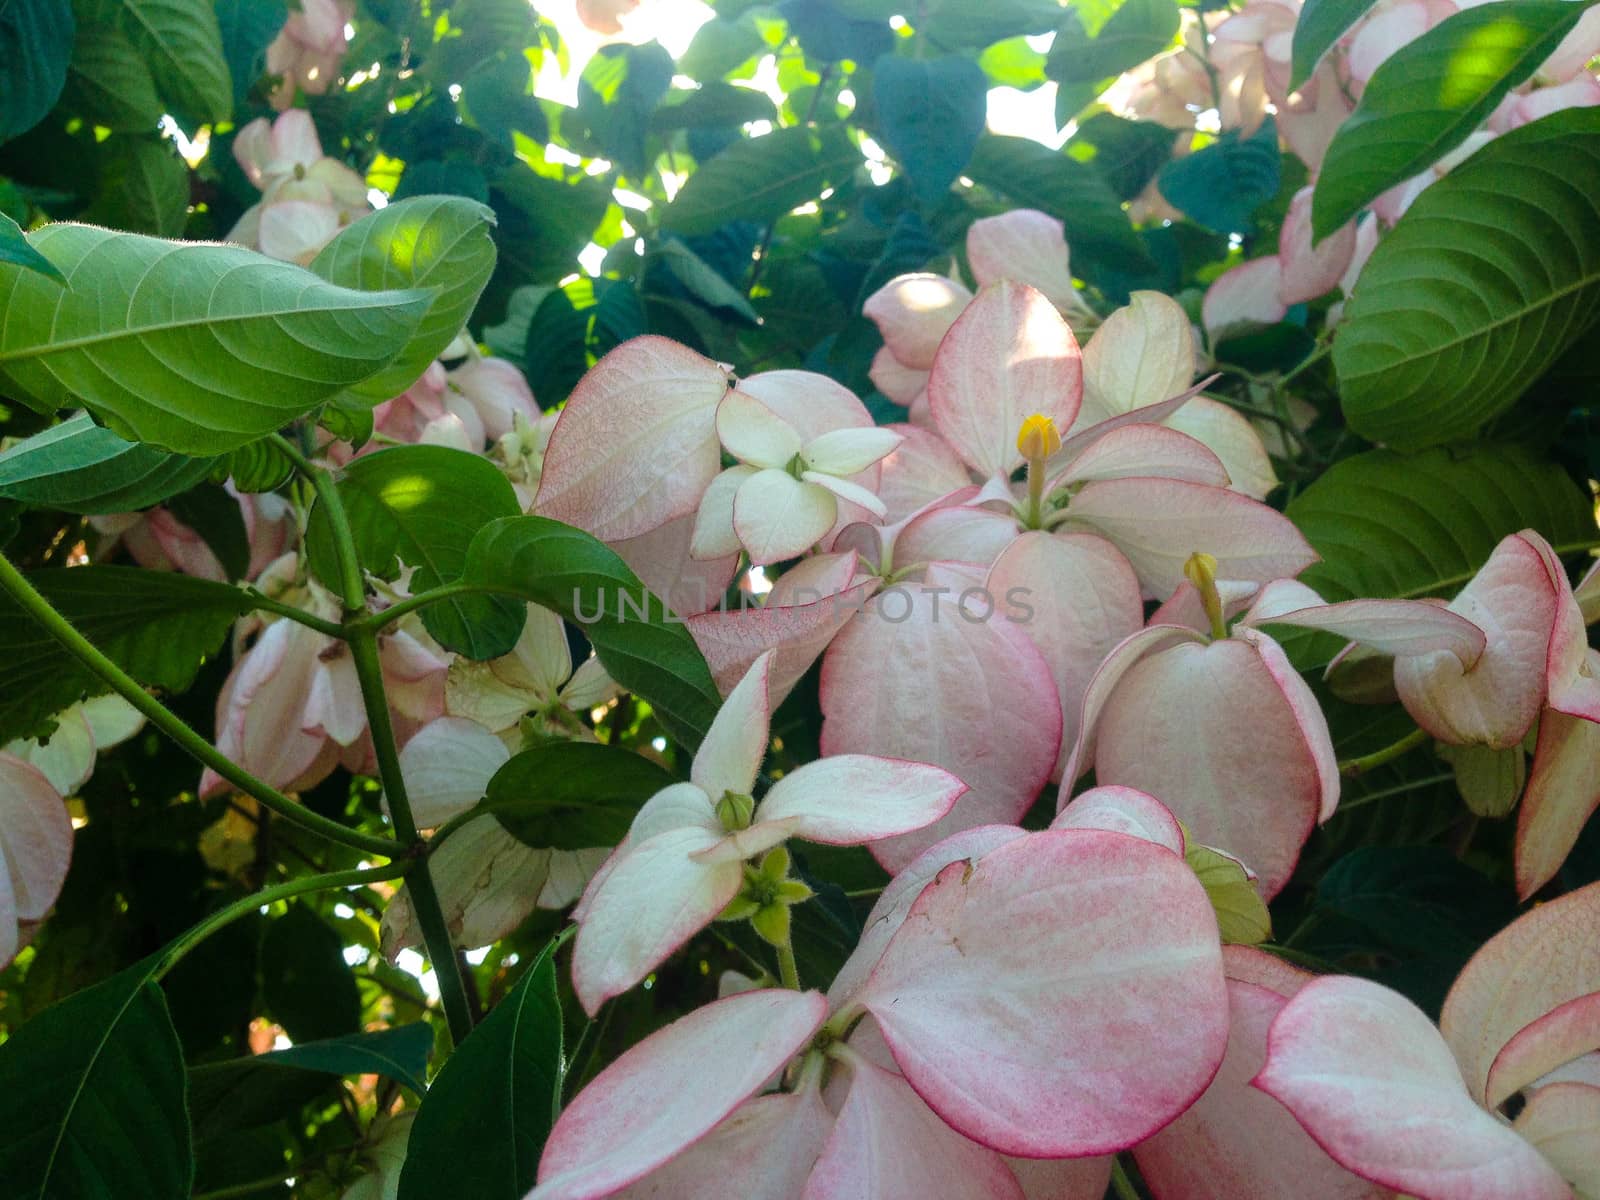 Nature view of pink flowers blooming in garden under sunlight